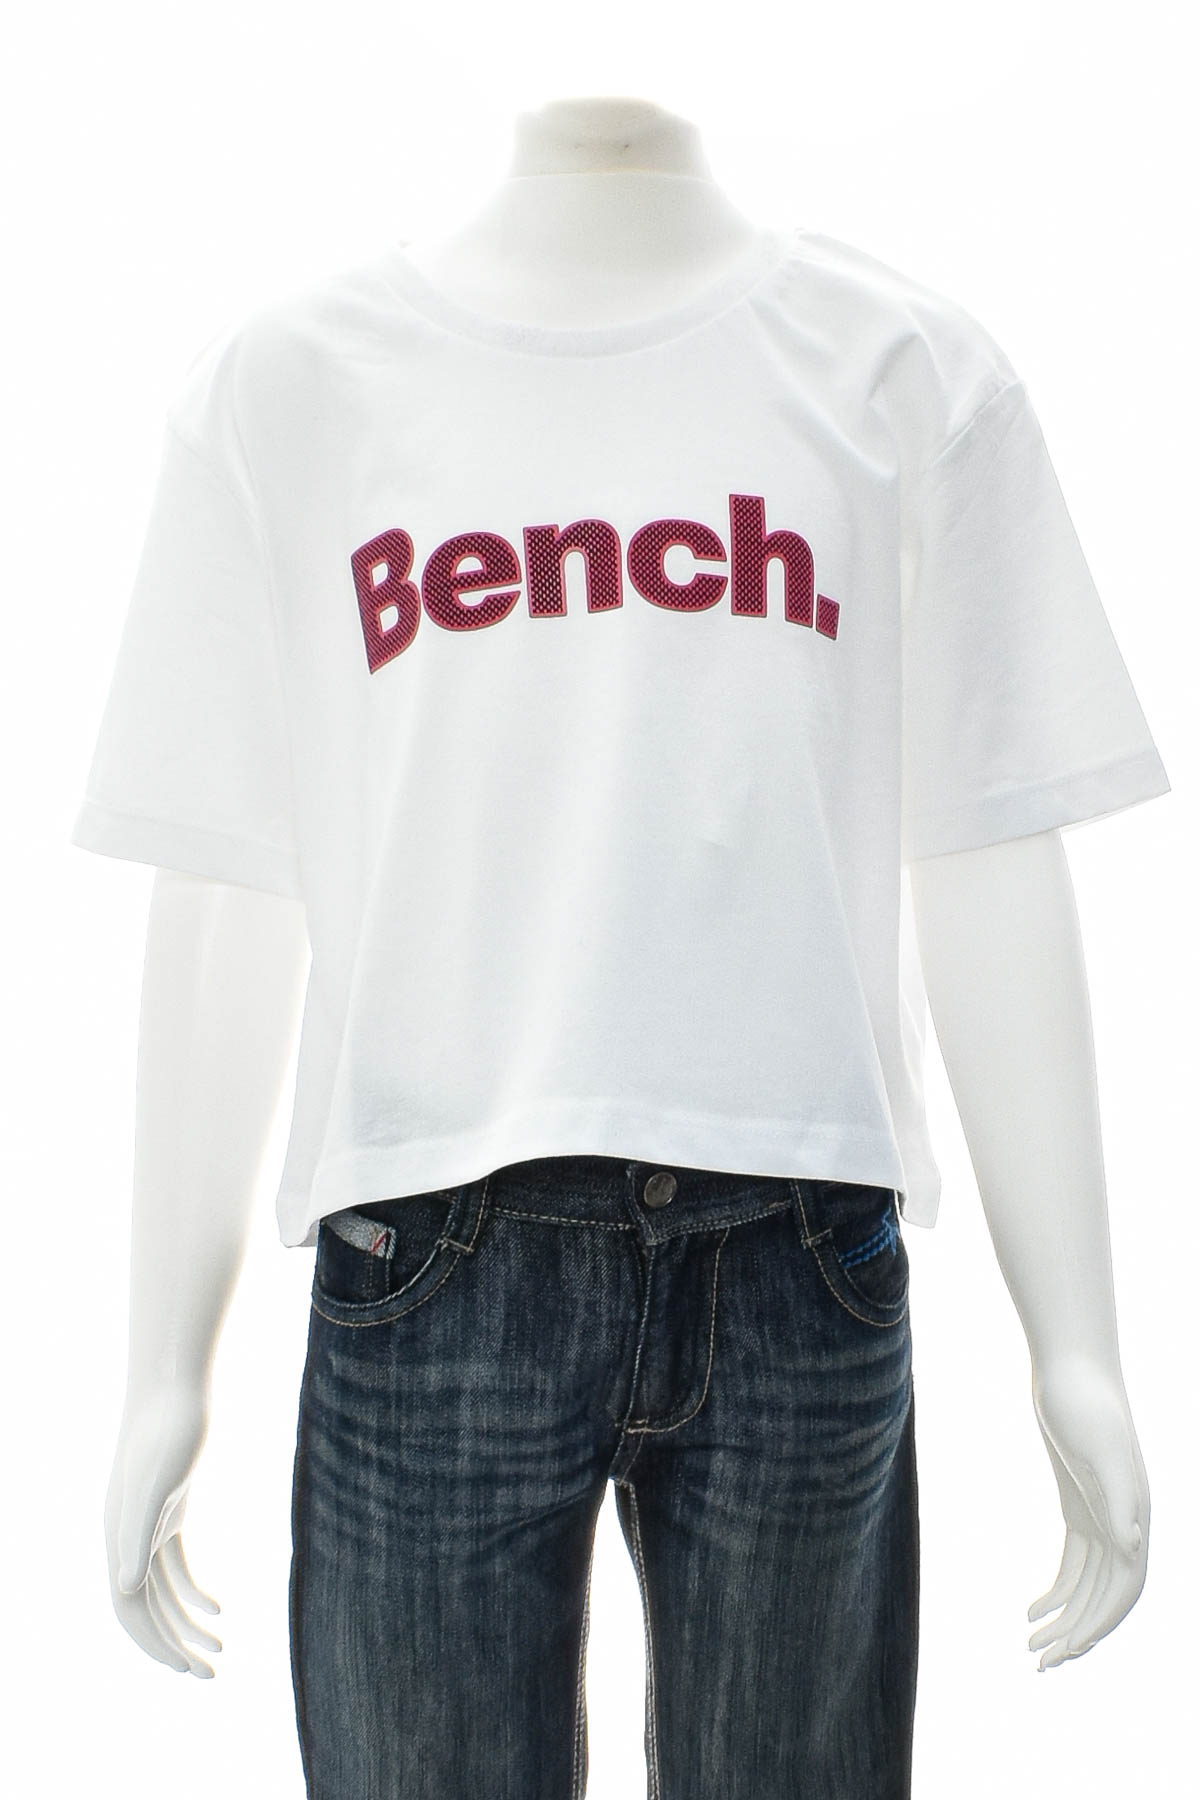 T-shirt για κορίτσι - Bench. - 0